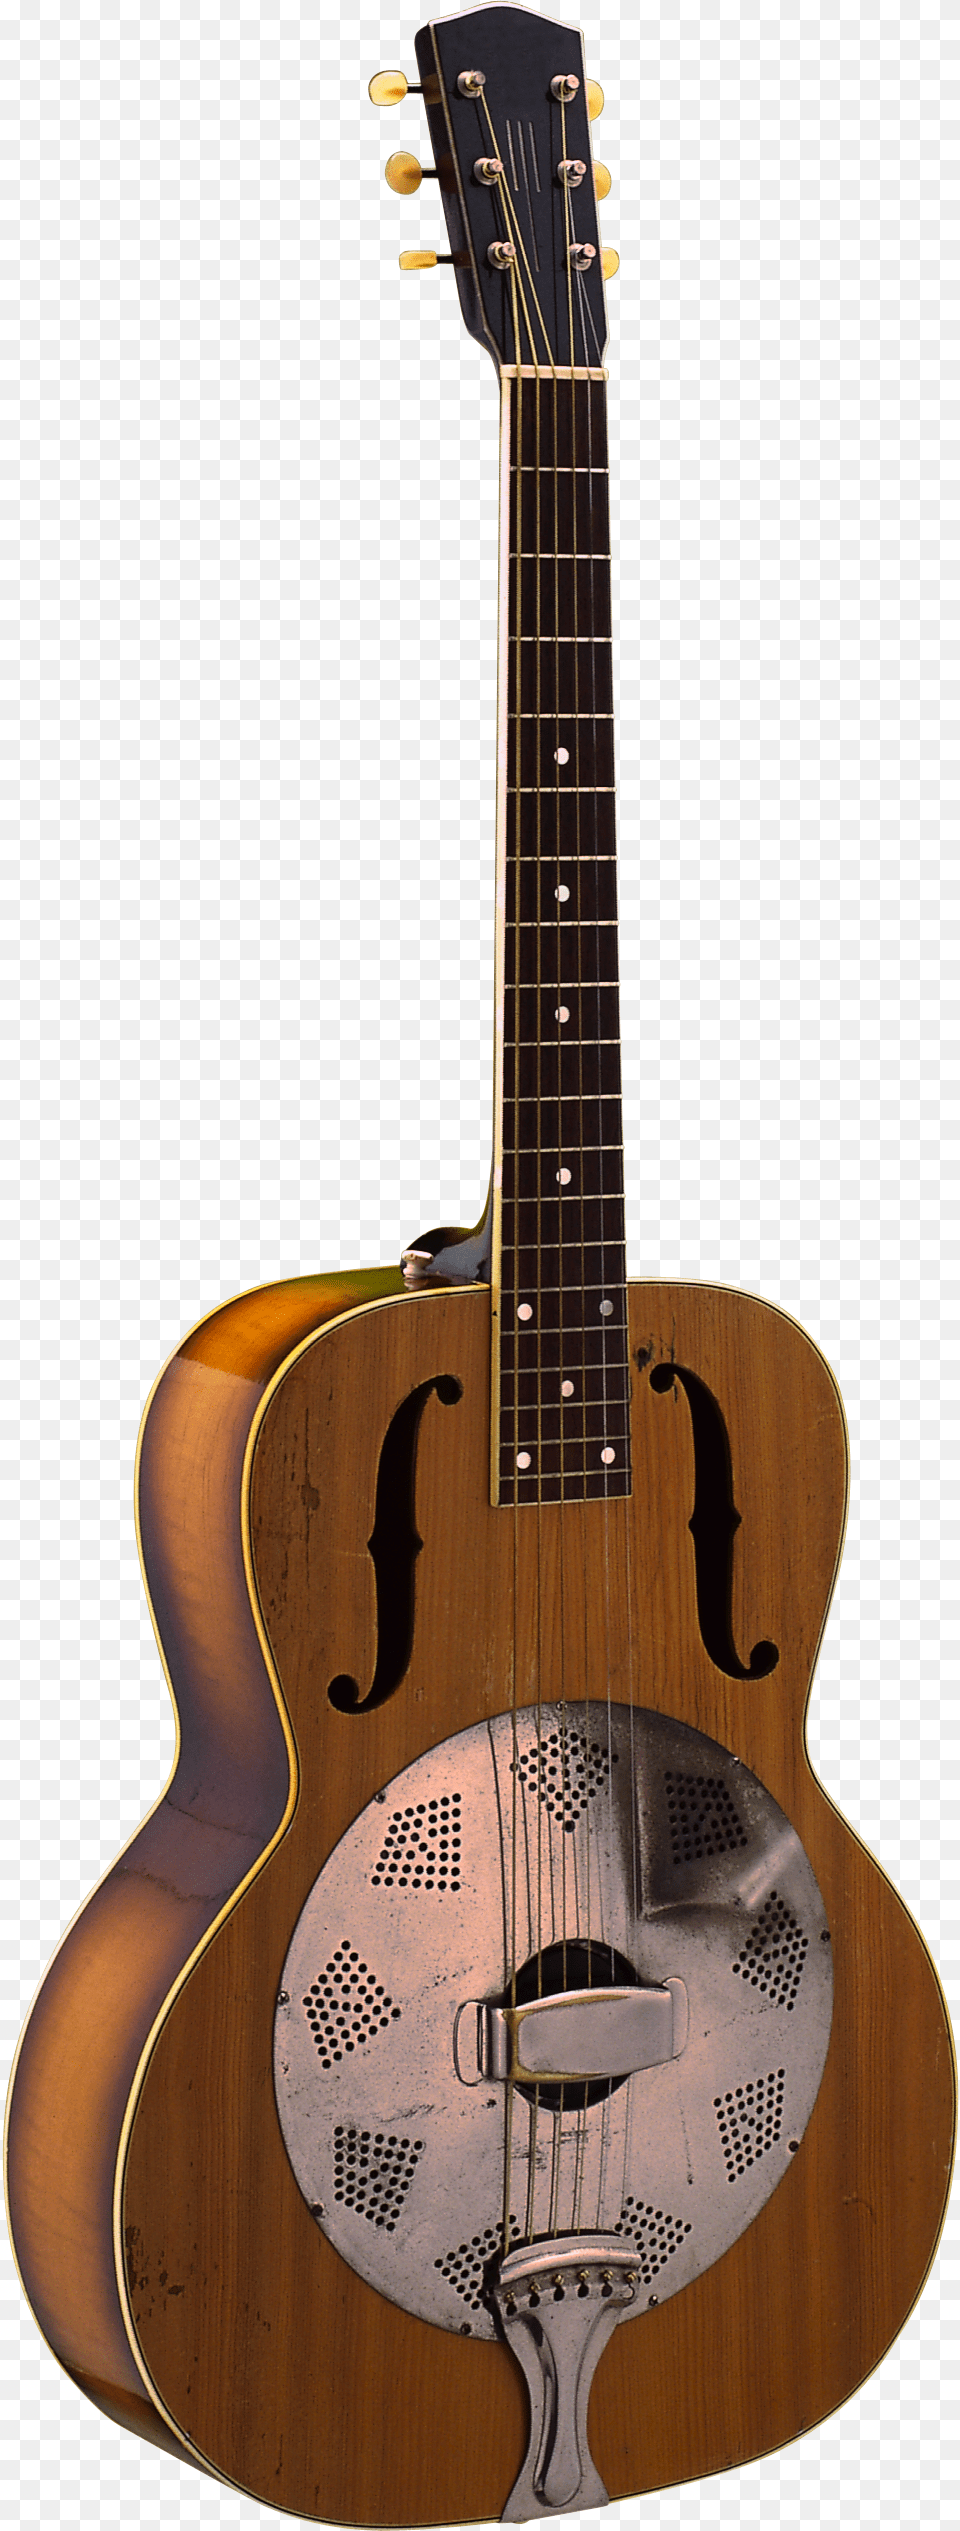 Guitar Image Steel Guitar Clipart, Musical Instrument, Lute, Mandolin Png